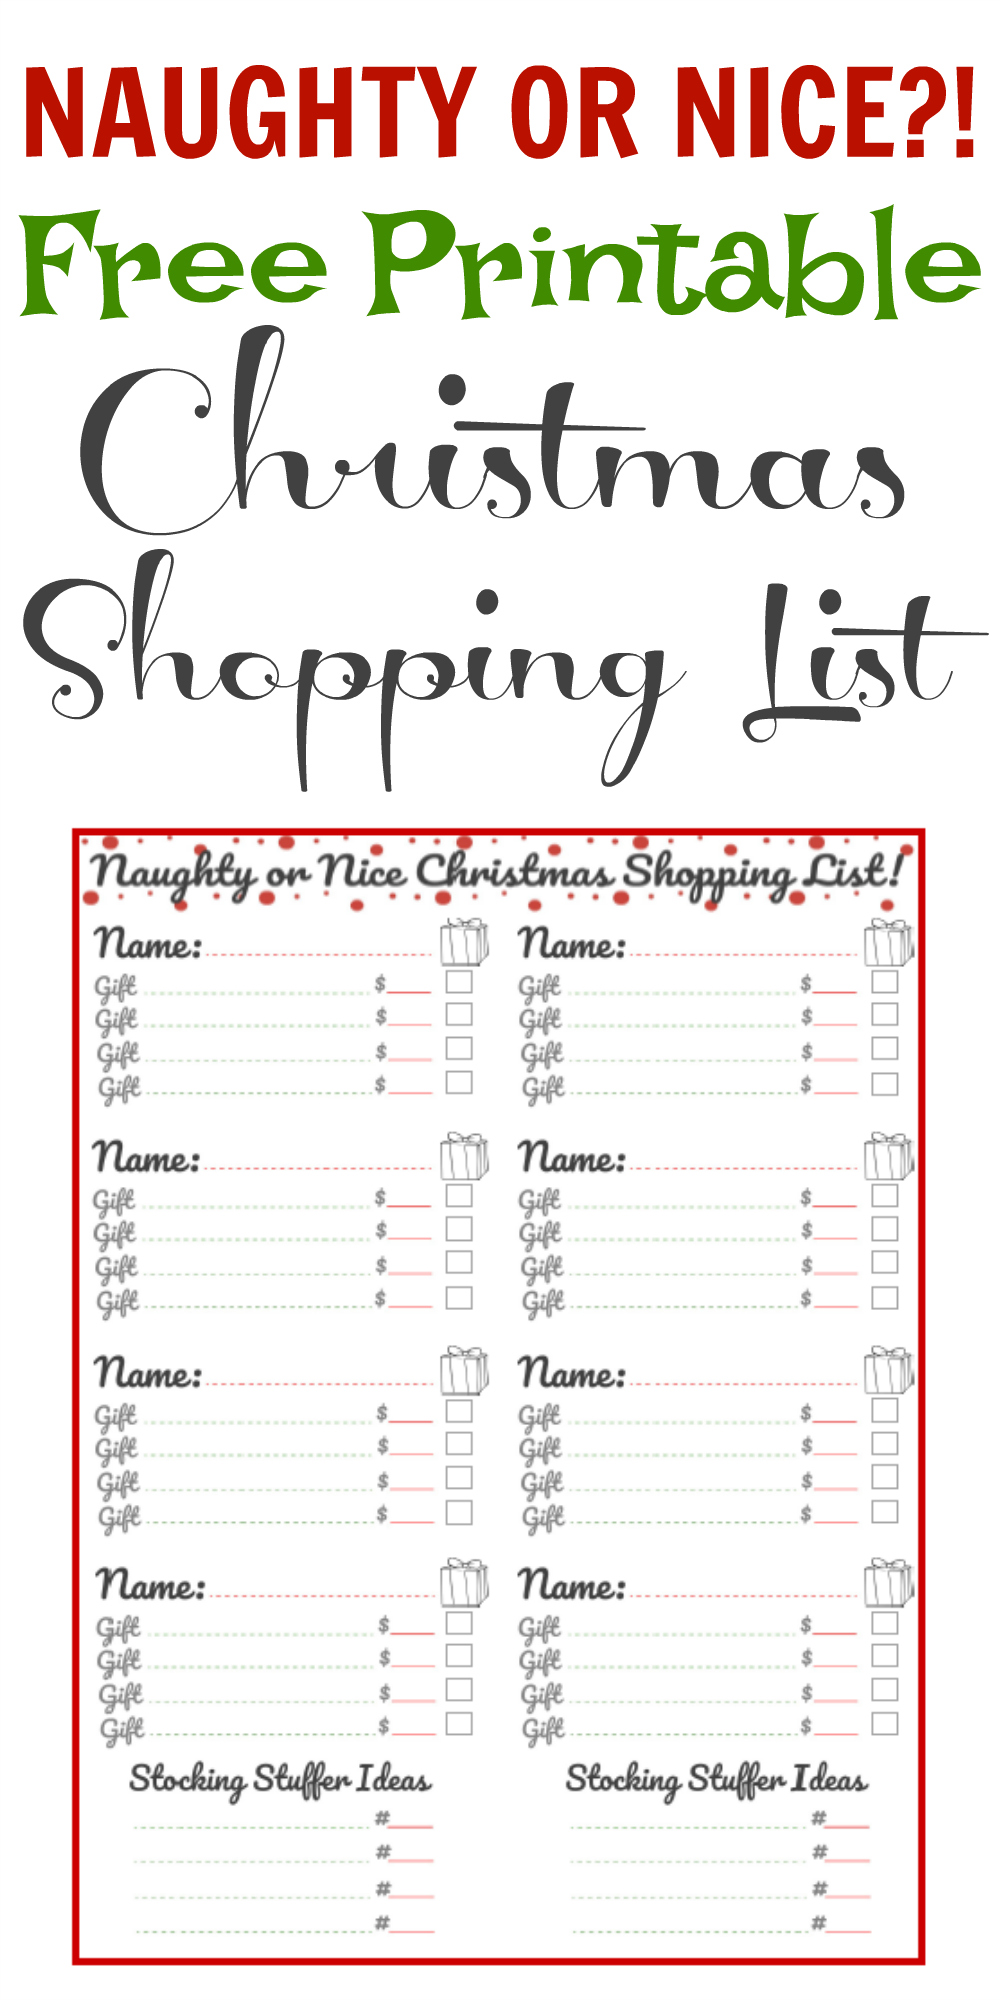 Free Printable Christmas Shopping List! TheProjectPile